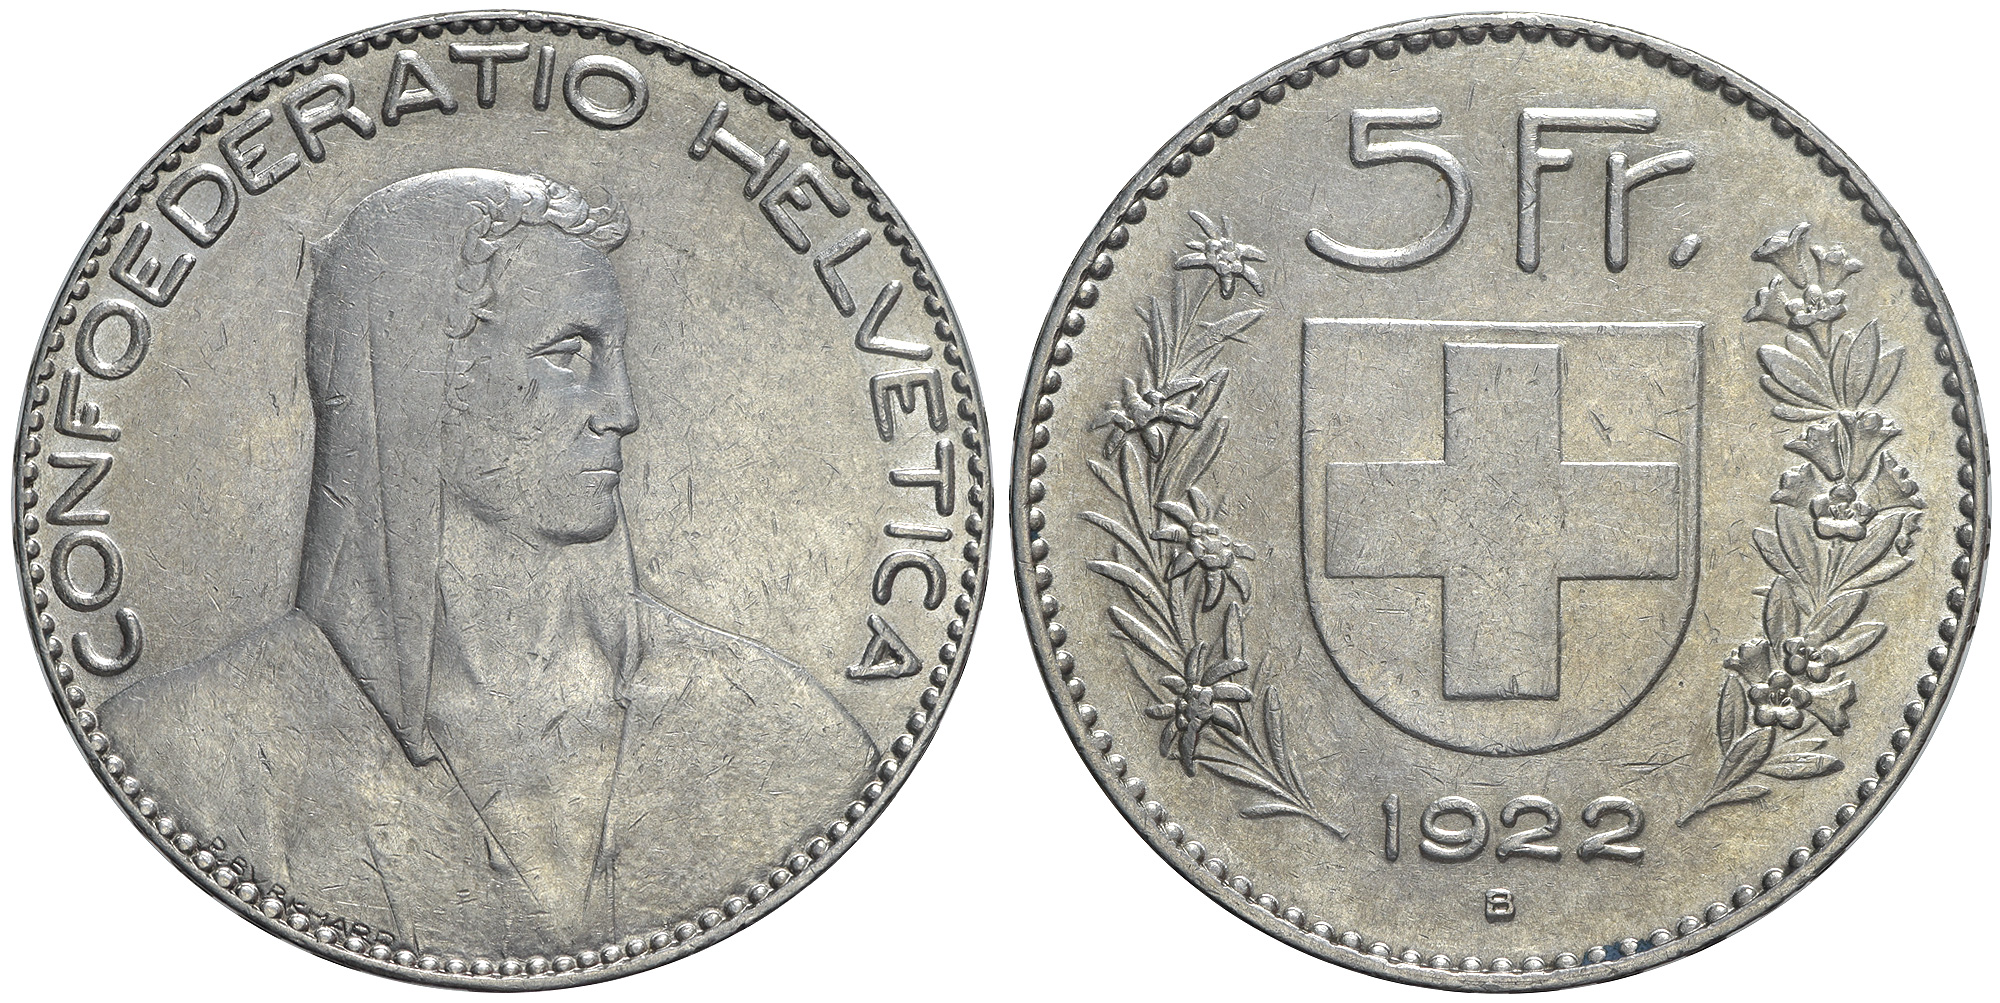 Switzerland Confoederatio Helvetica Francs 1922 